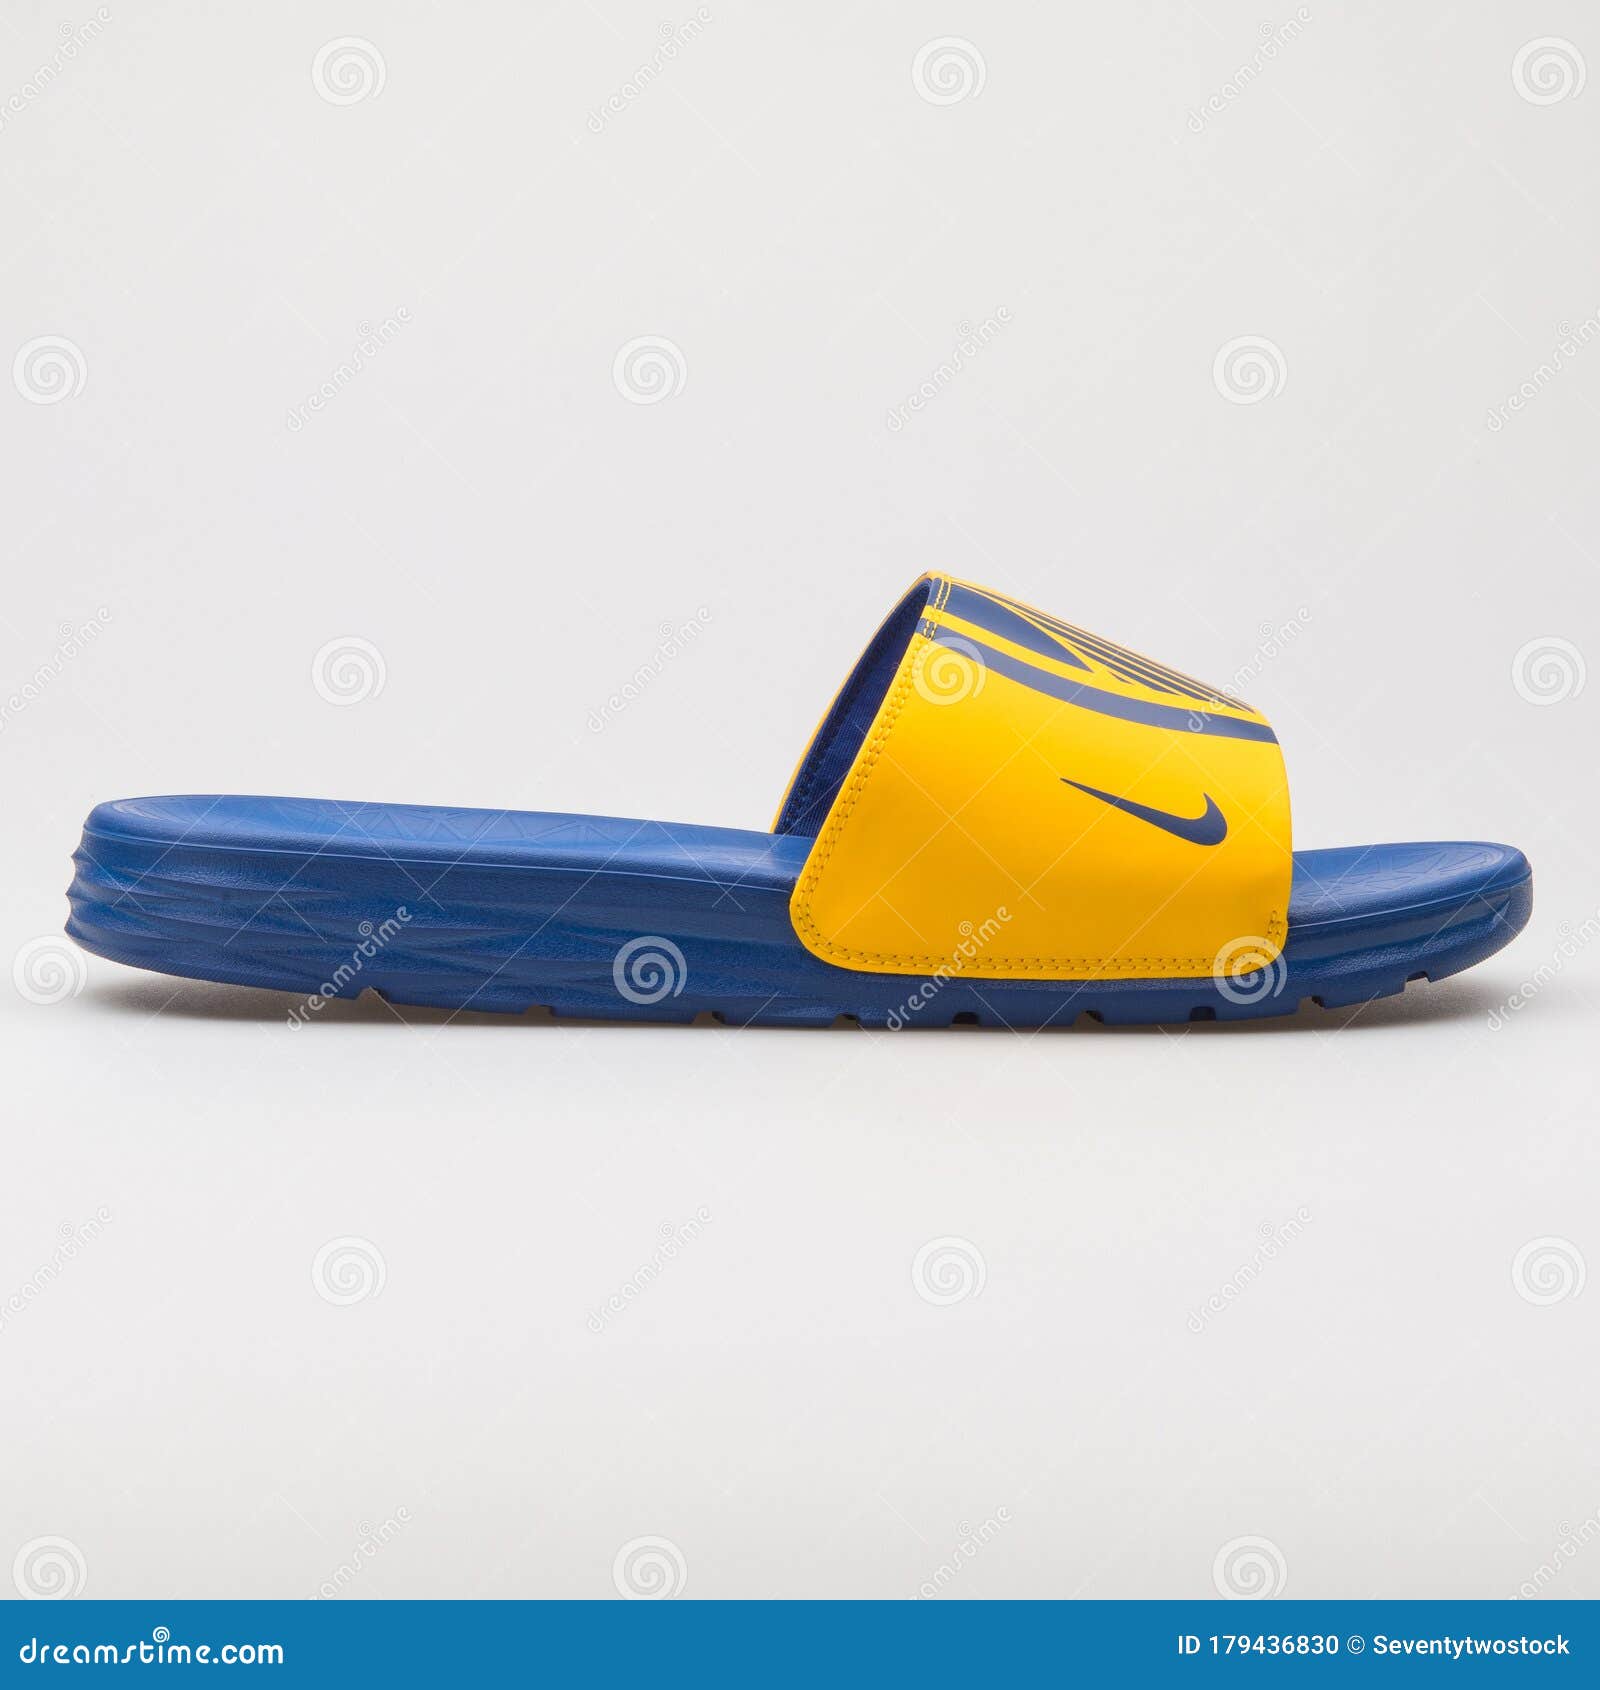 Tantos modo hipoteca Nike Benassi Solarsoft Nba Sandalias Amarillas Y Azules Imagen editorial -  Imagen de sandalia, producto: 179436830